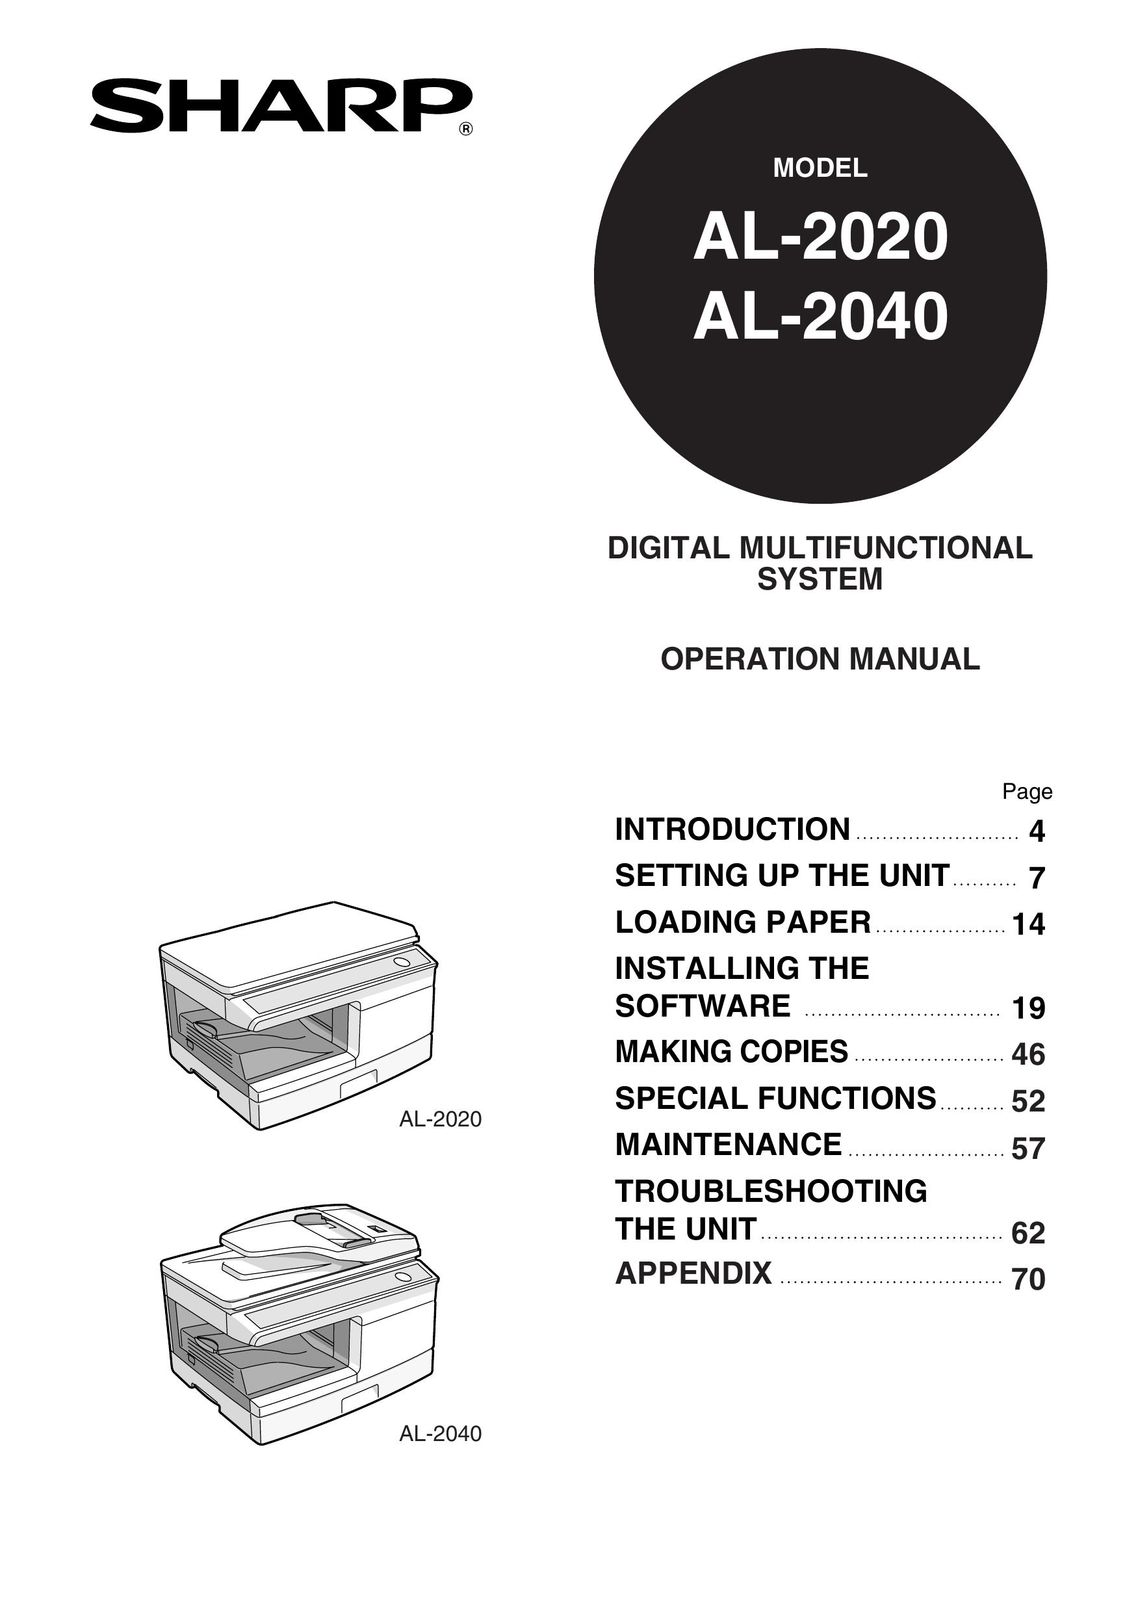 Sharp AL-2040 All in One Printer User Manual